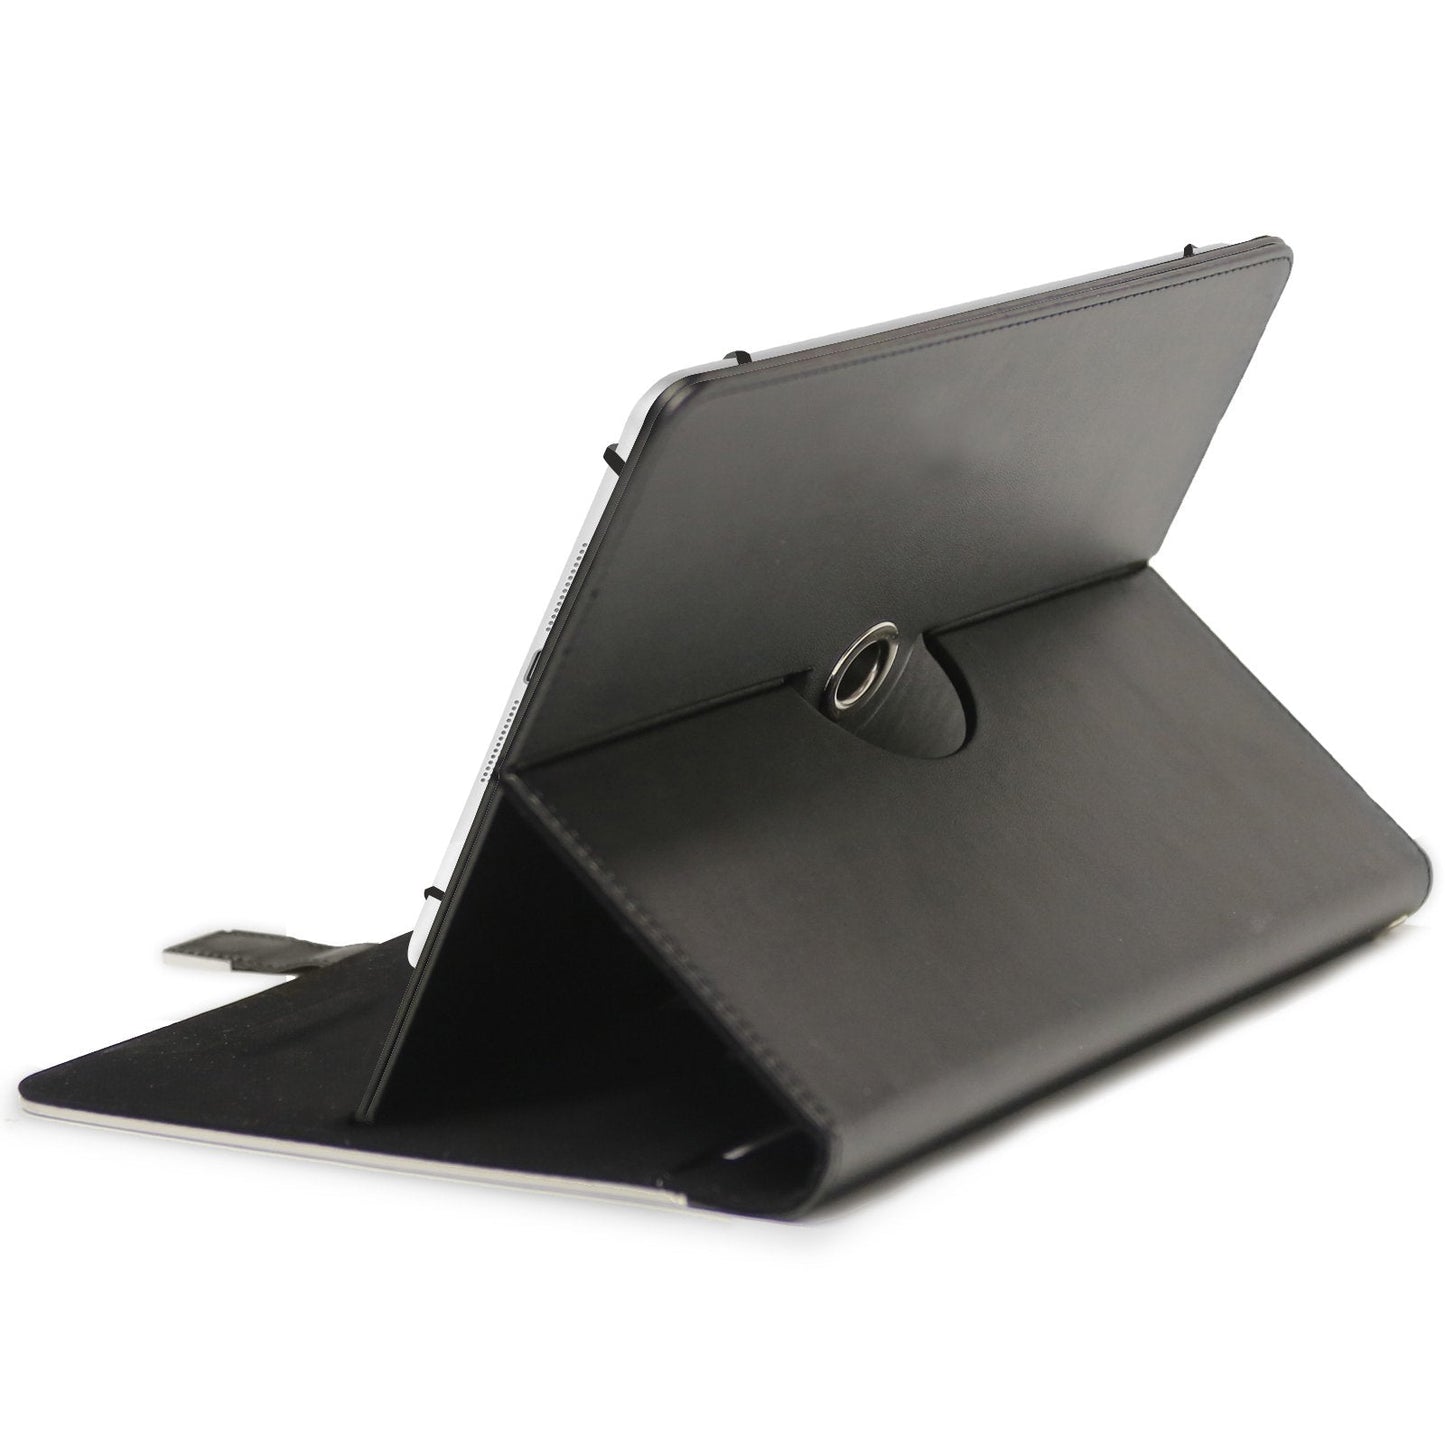 Personalisierte Micromax Universal-Tablet-Hülle aus Leder mit grauem Speckle-Marmor